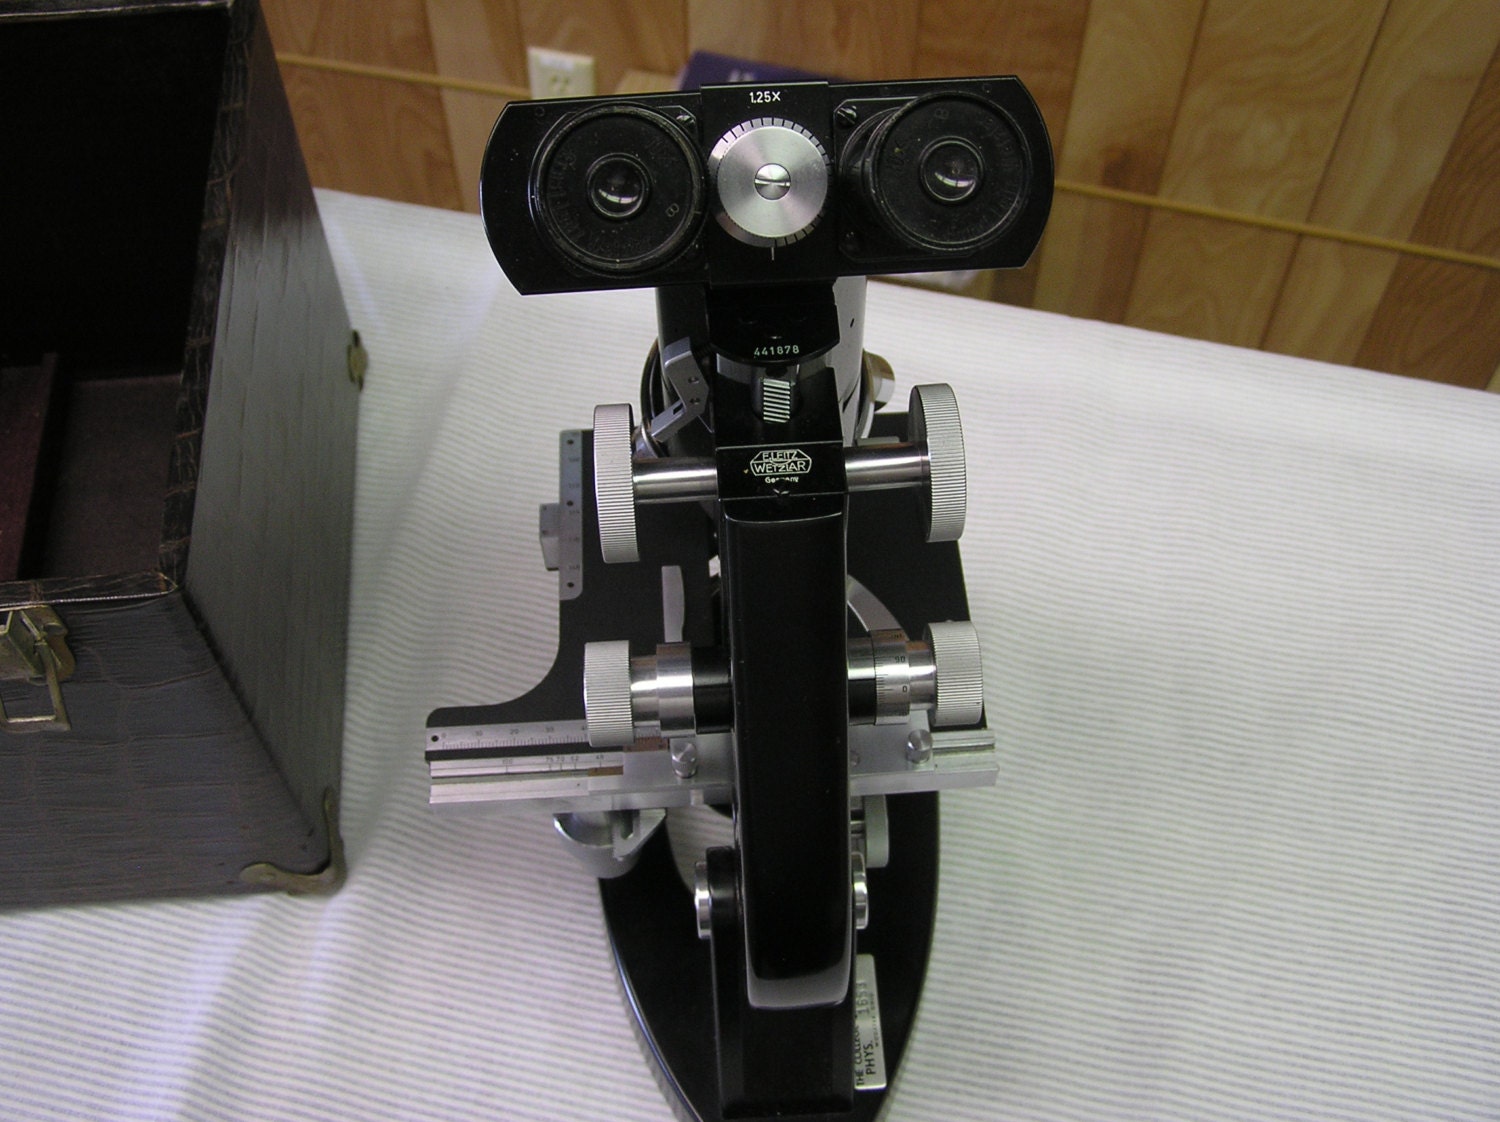 Leitz wetzlar binoculars serial numbers